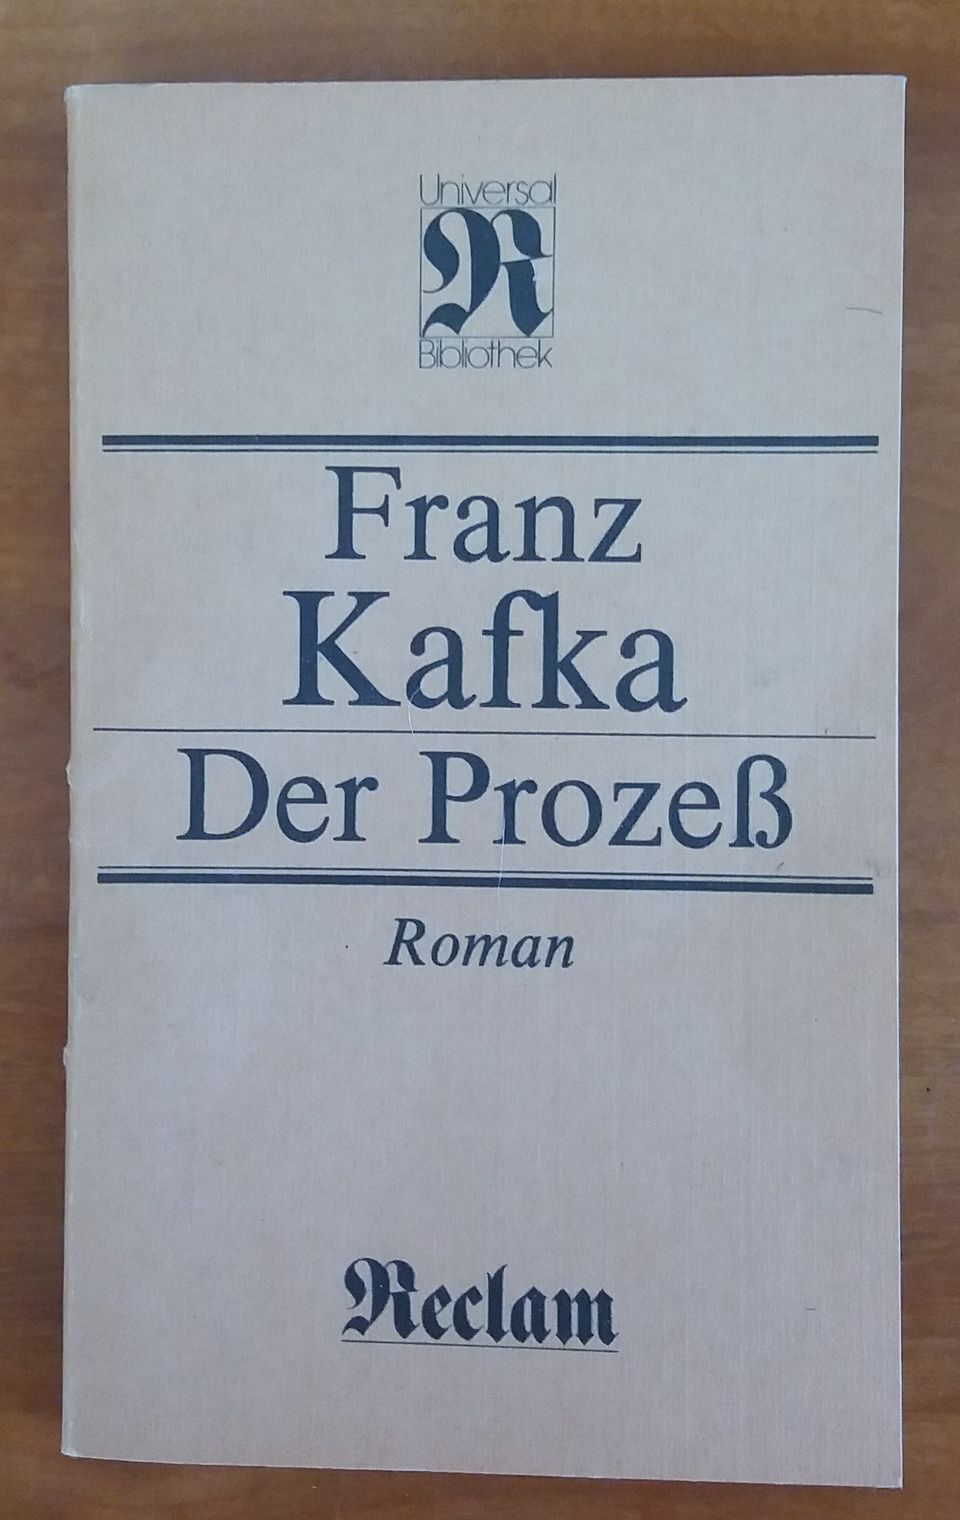 Franz Kafka DER PROZESS - Roman Philip Reclam 2p 1989